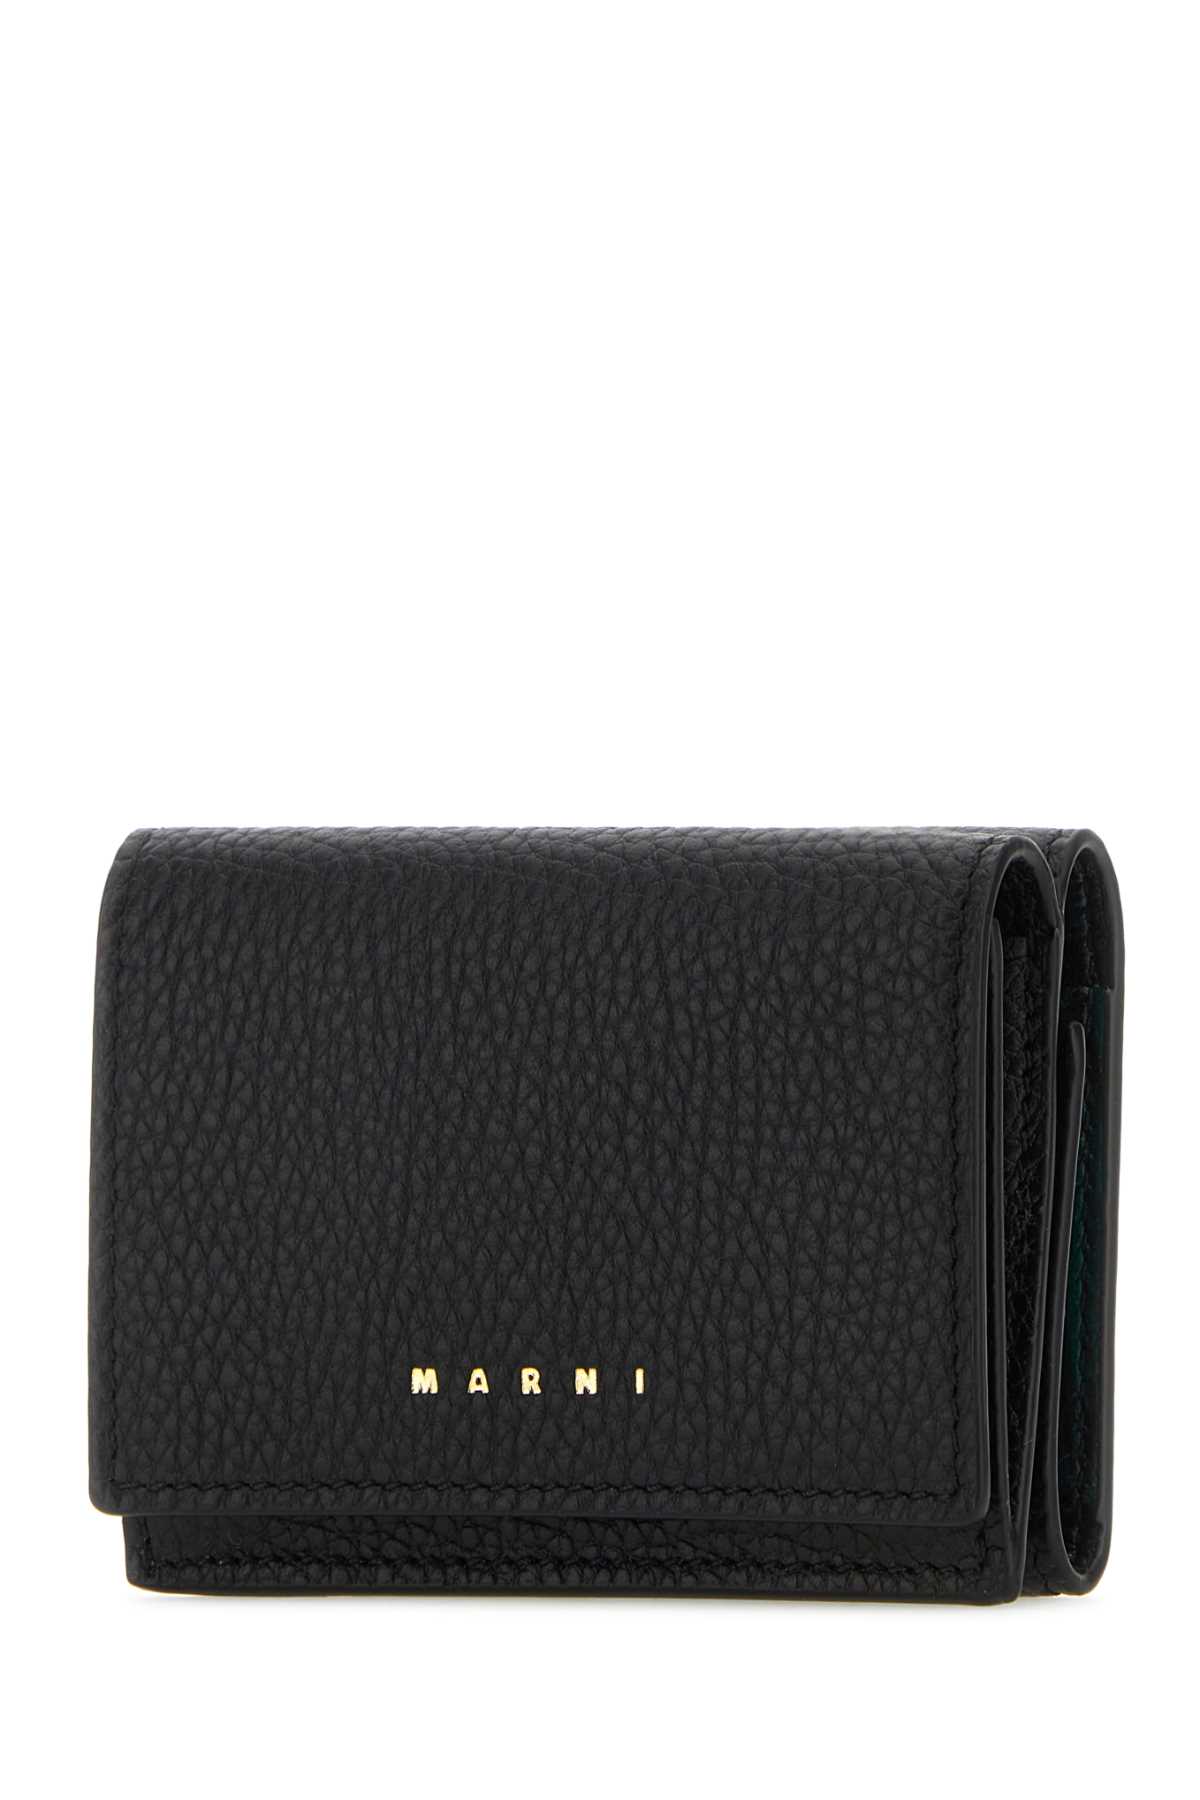 Marni Black Leather Wallet In Blacksphericalgreen